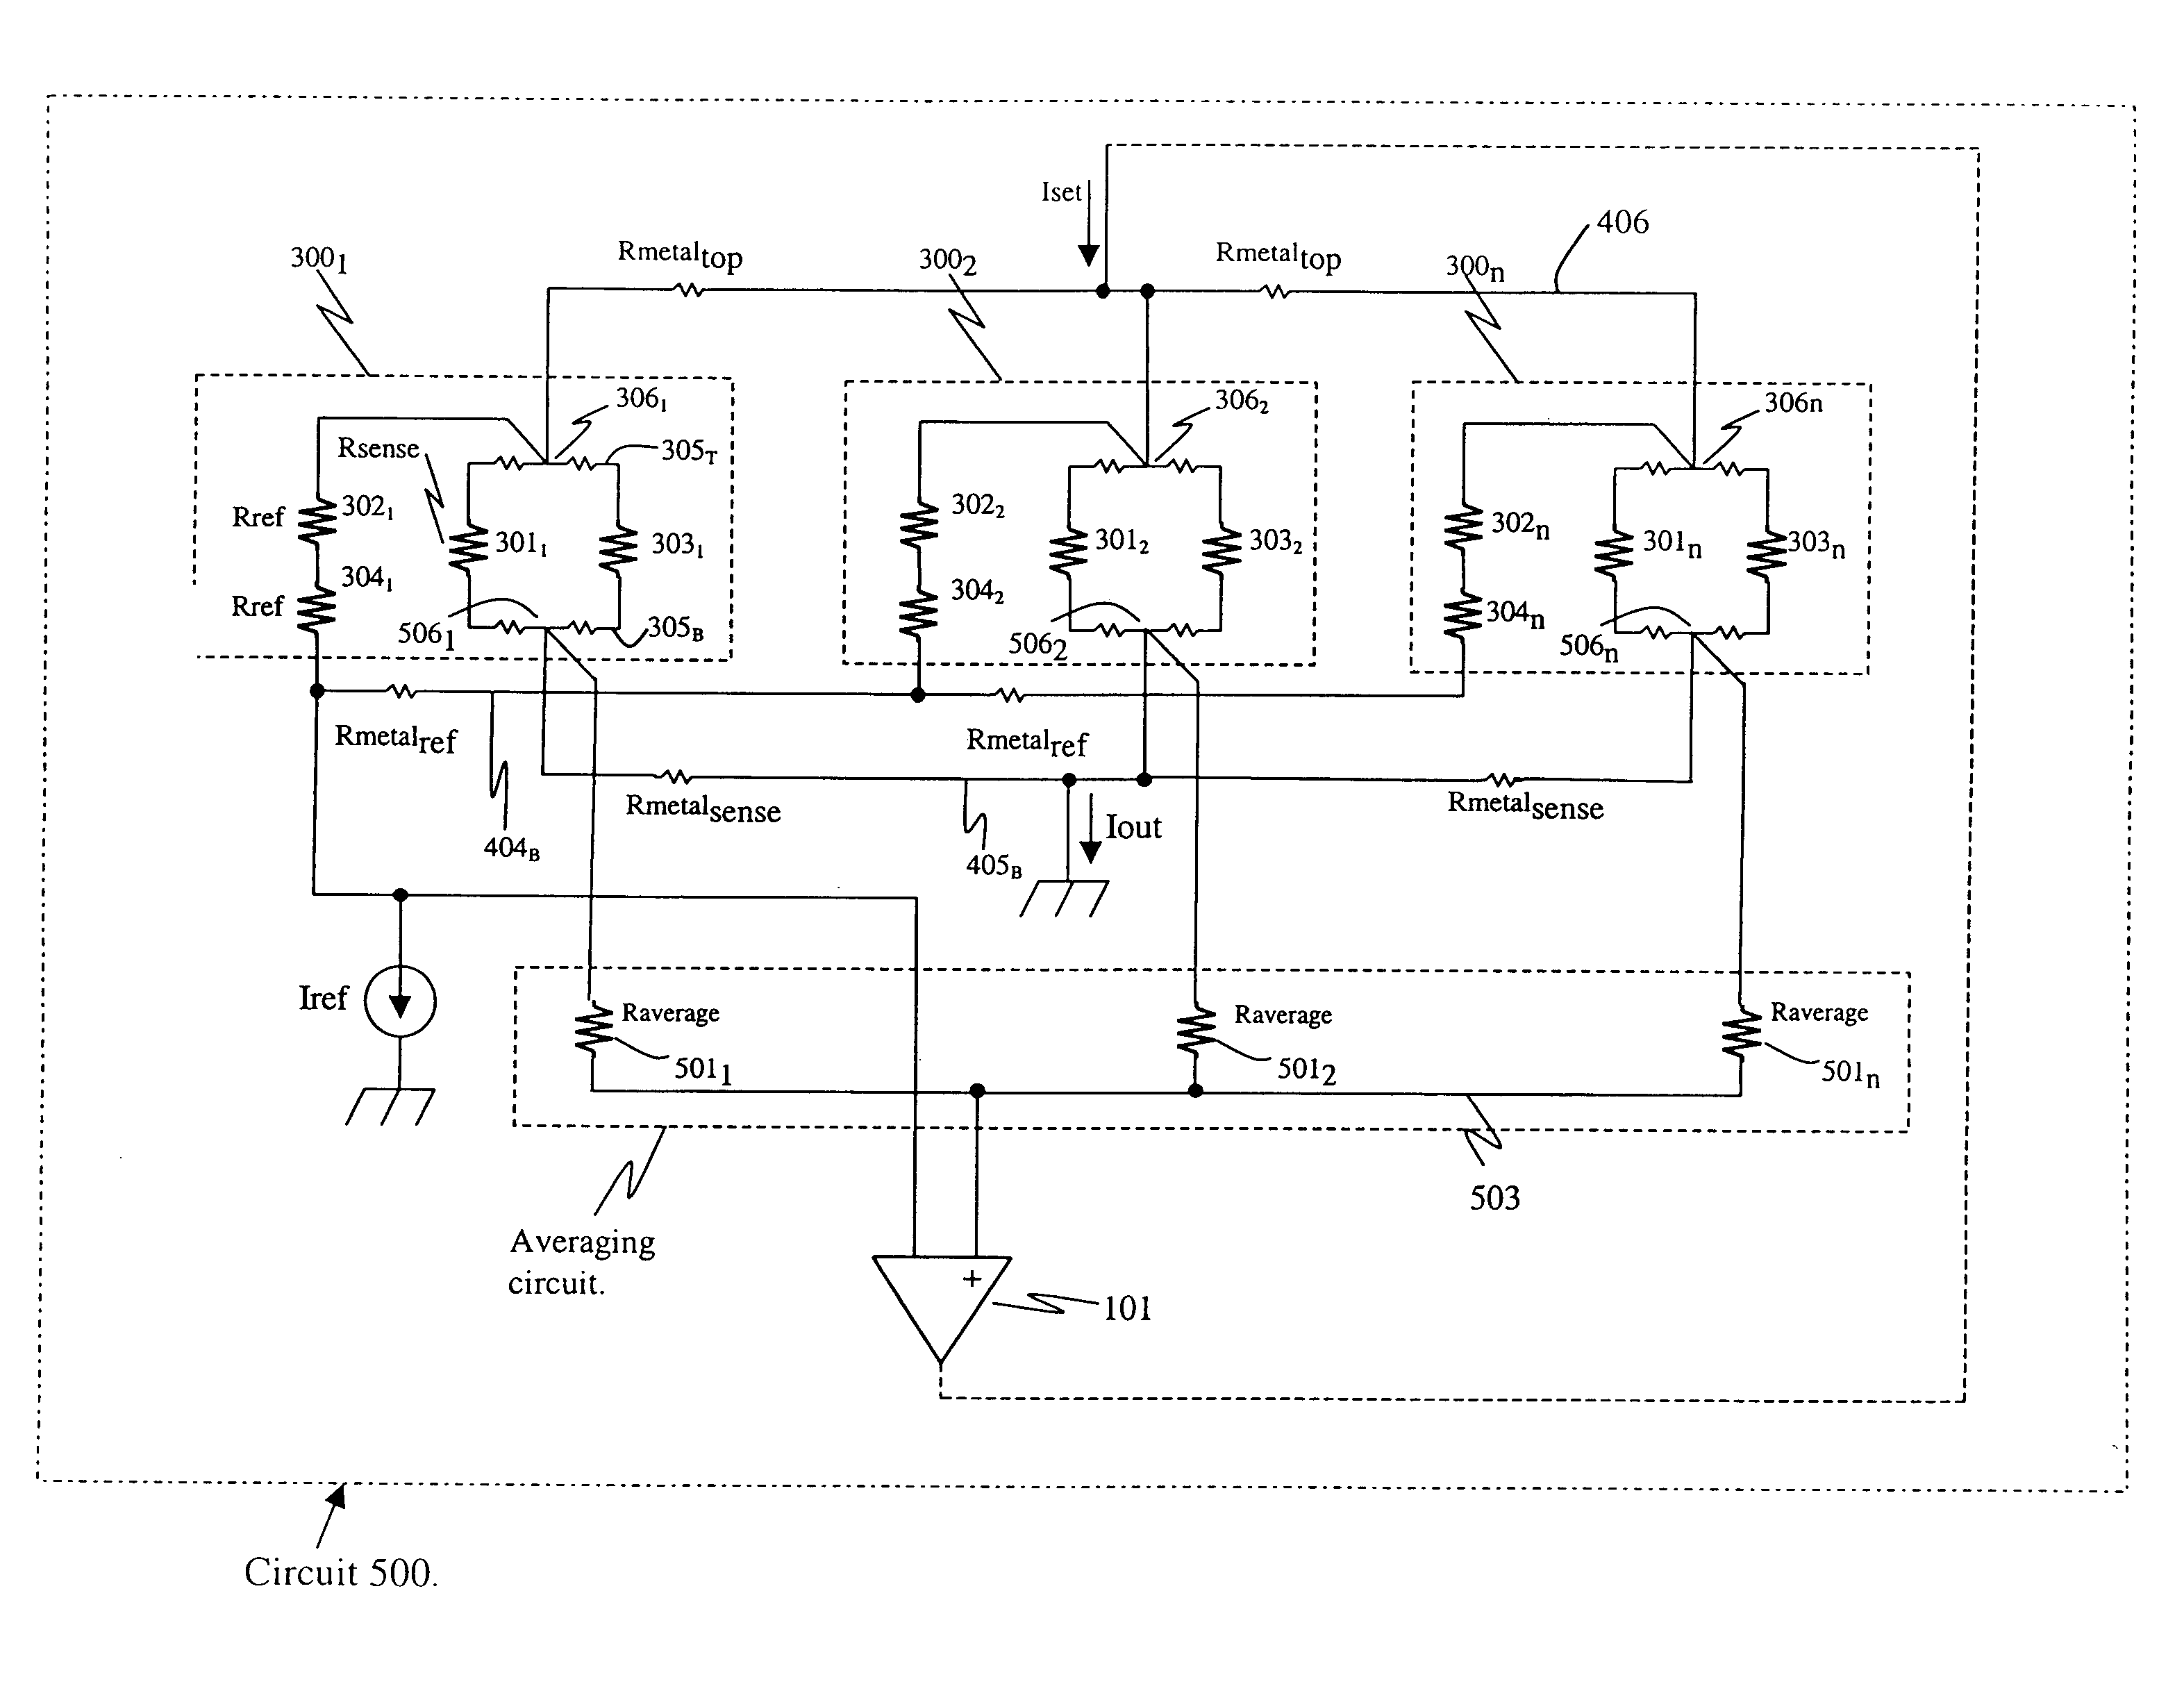 Current sense resistor circuit with averaging Kelvin sense features